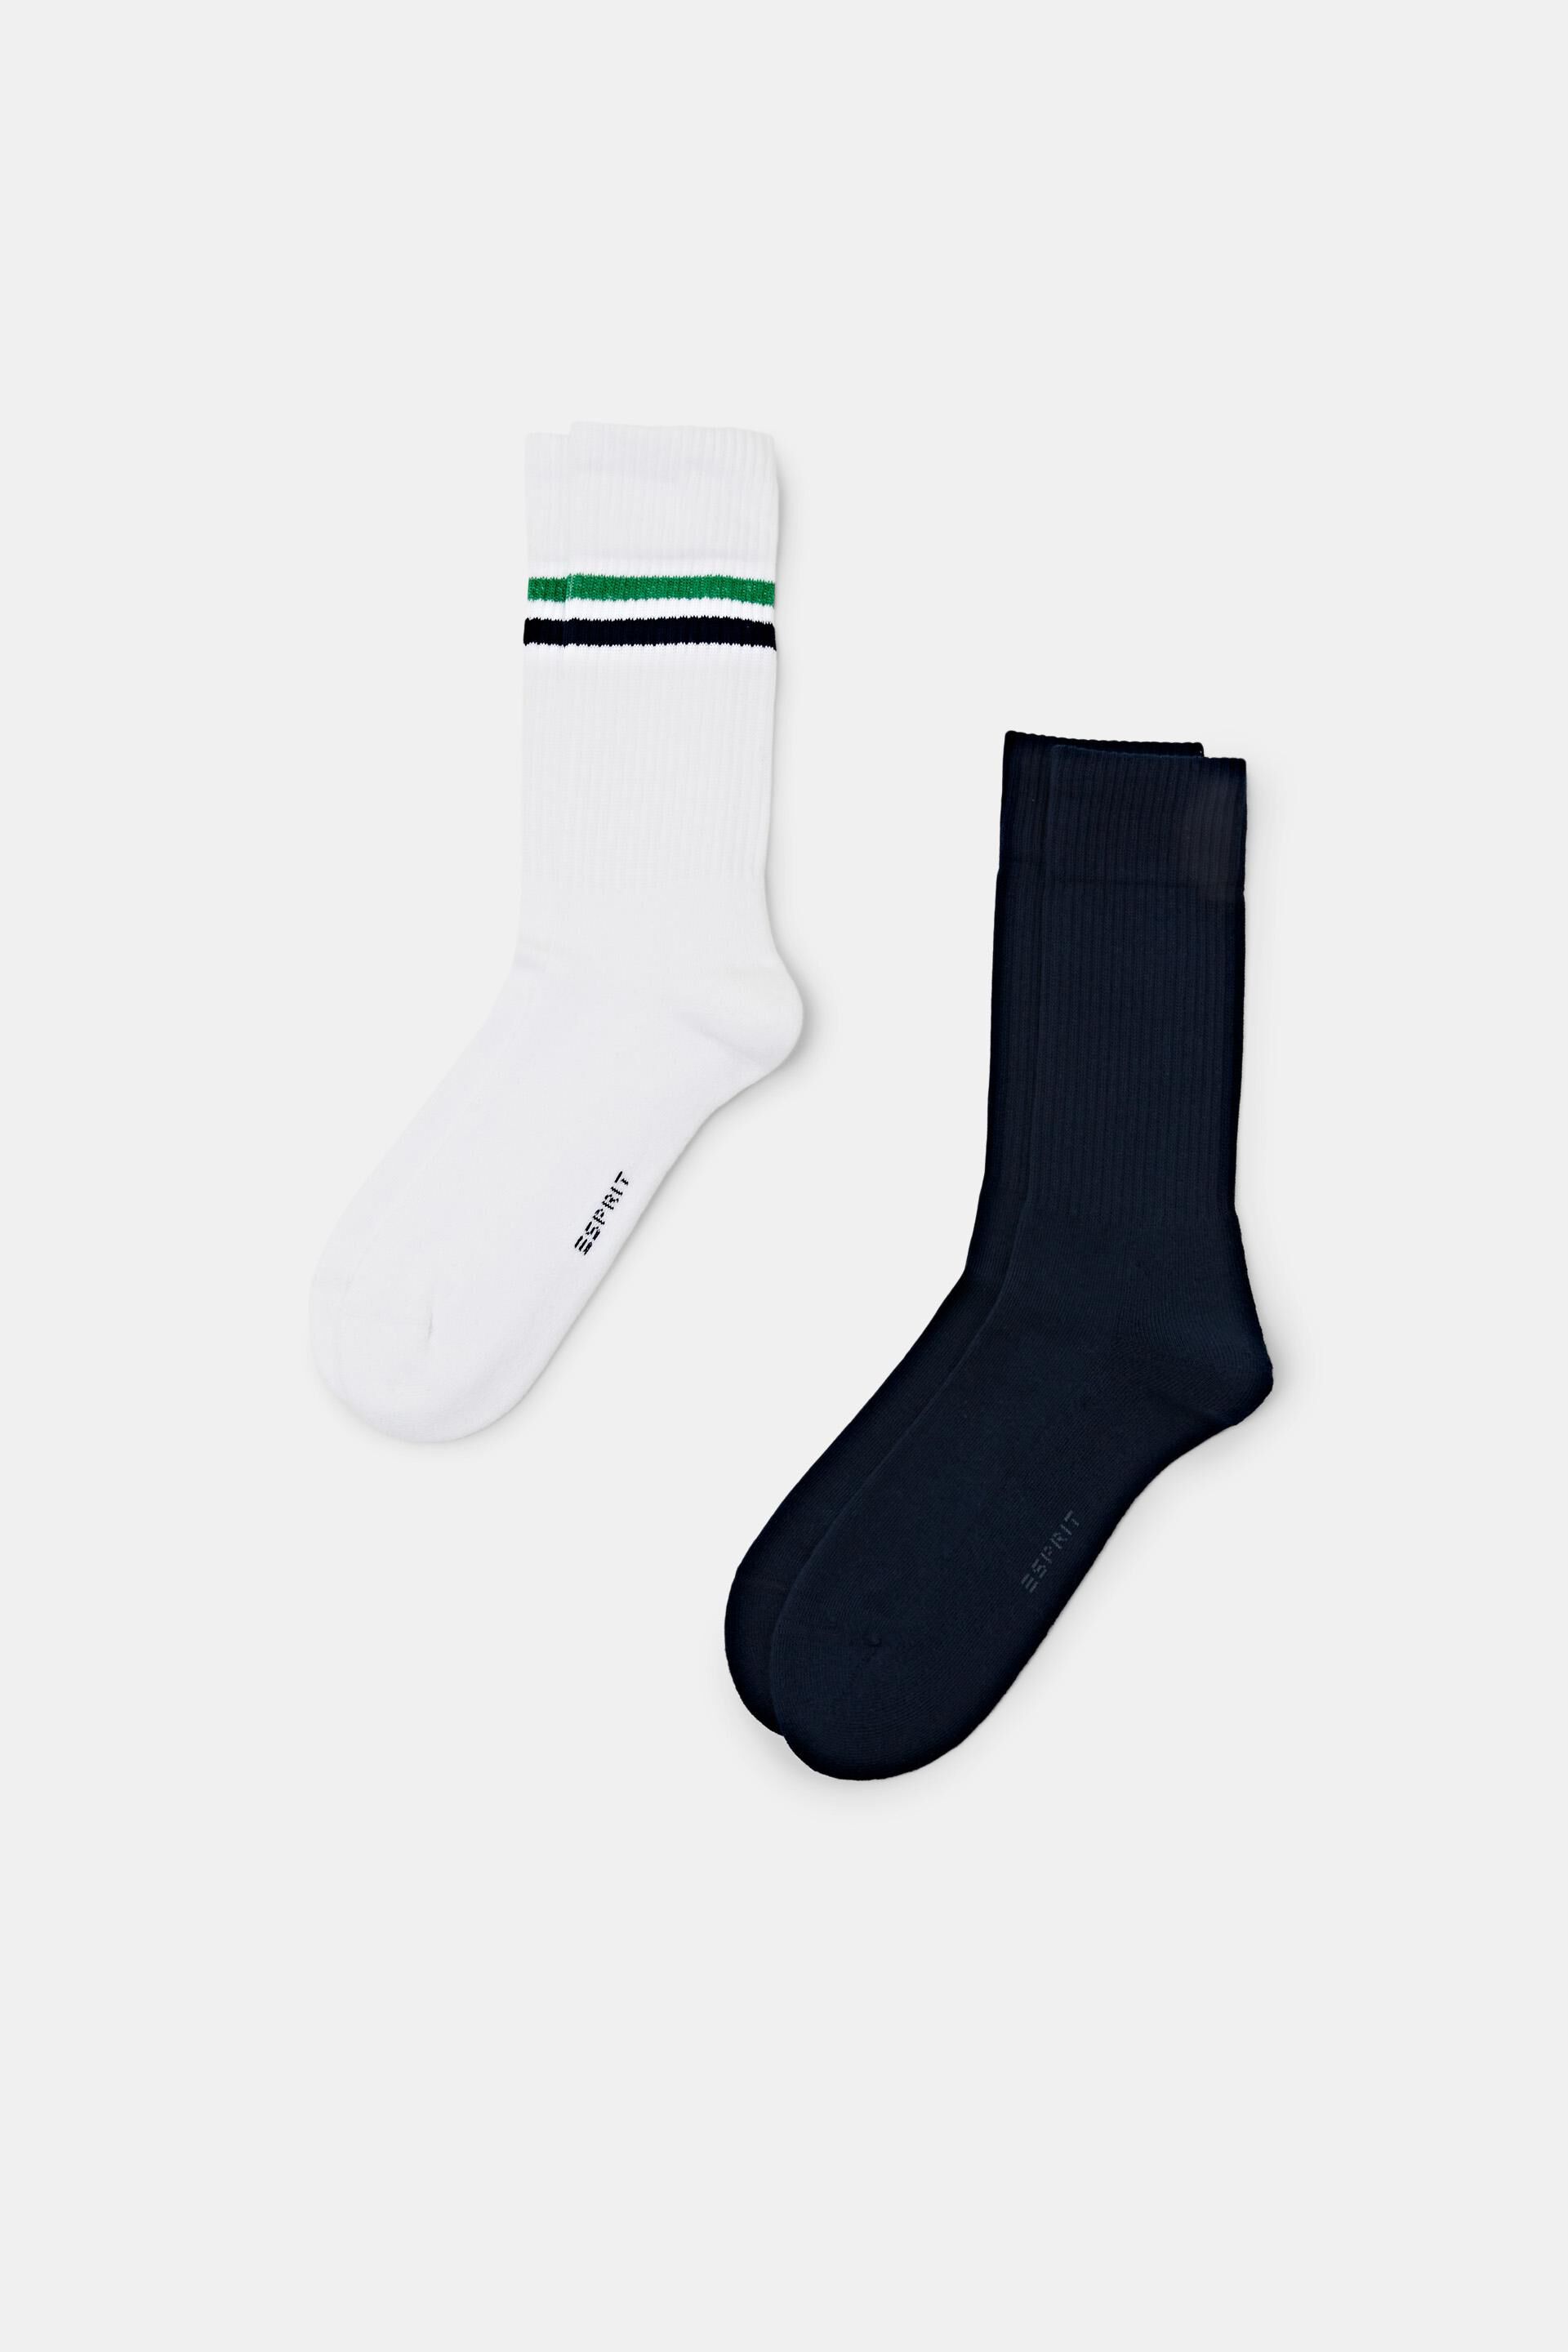 Esprit organic athletic cotton 2-pack socks, of